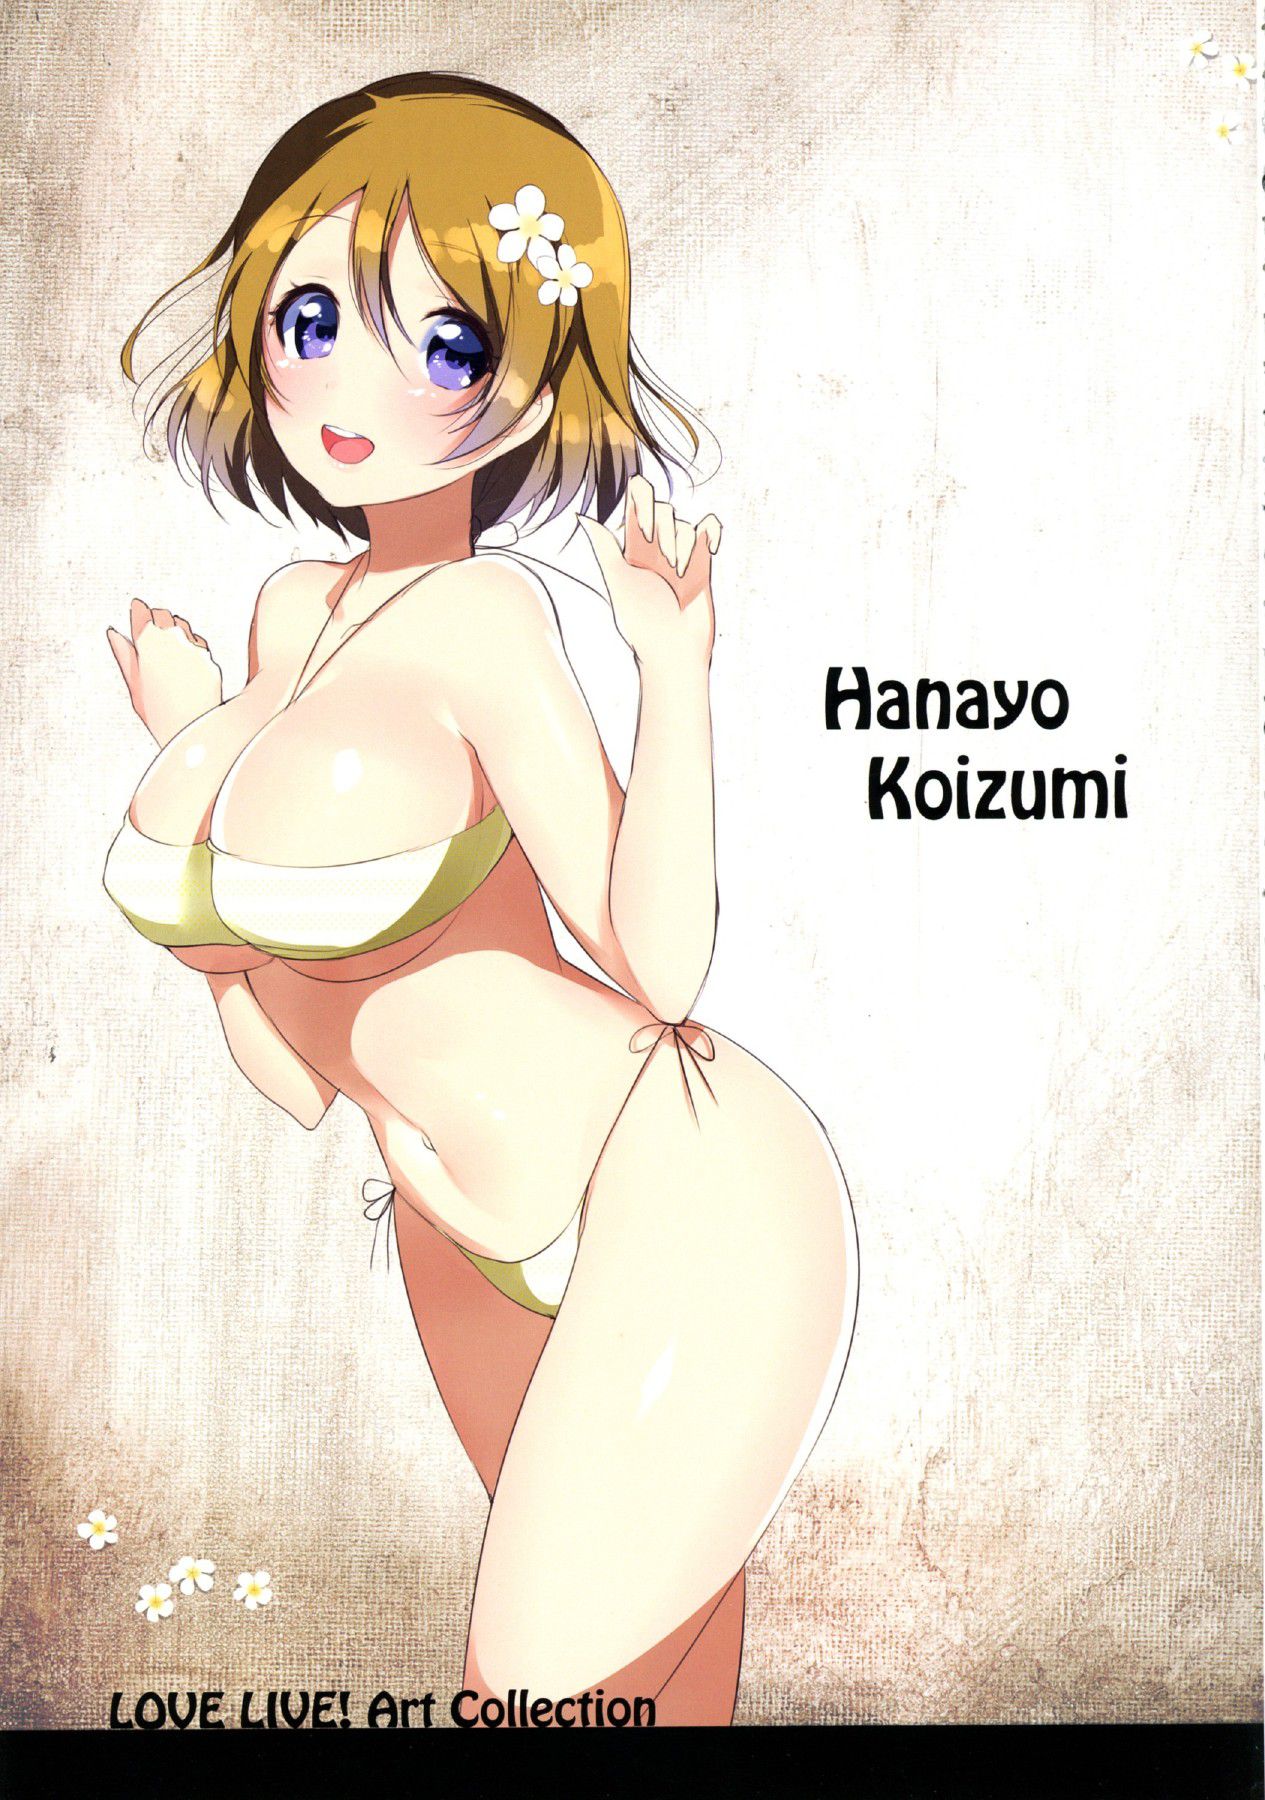 [Second-order] [love live] Koizumi Hanayo's cute secondary erotic image [Love live] 23